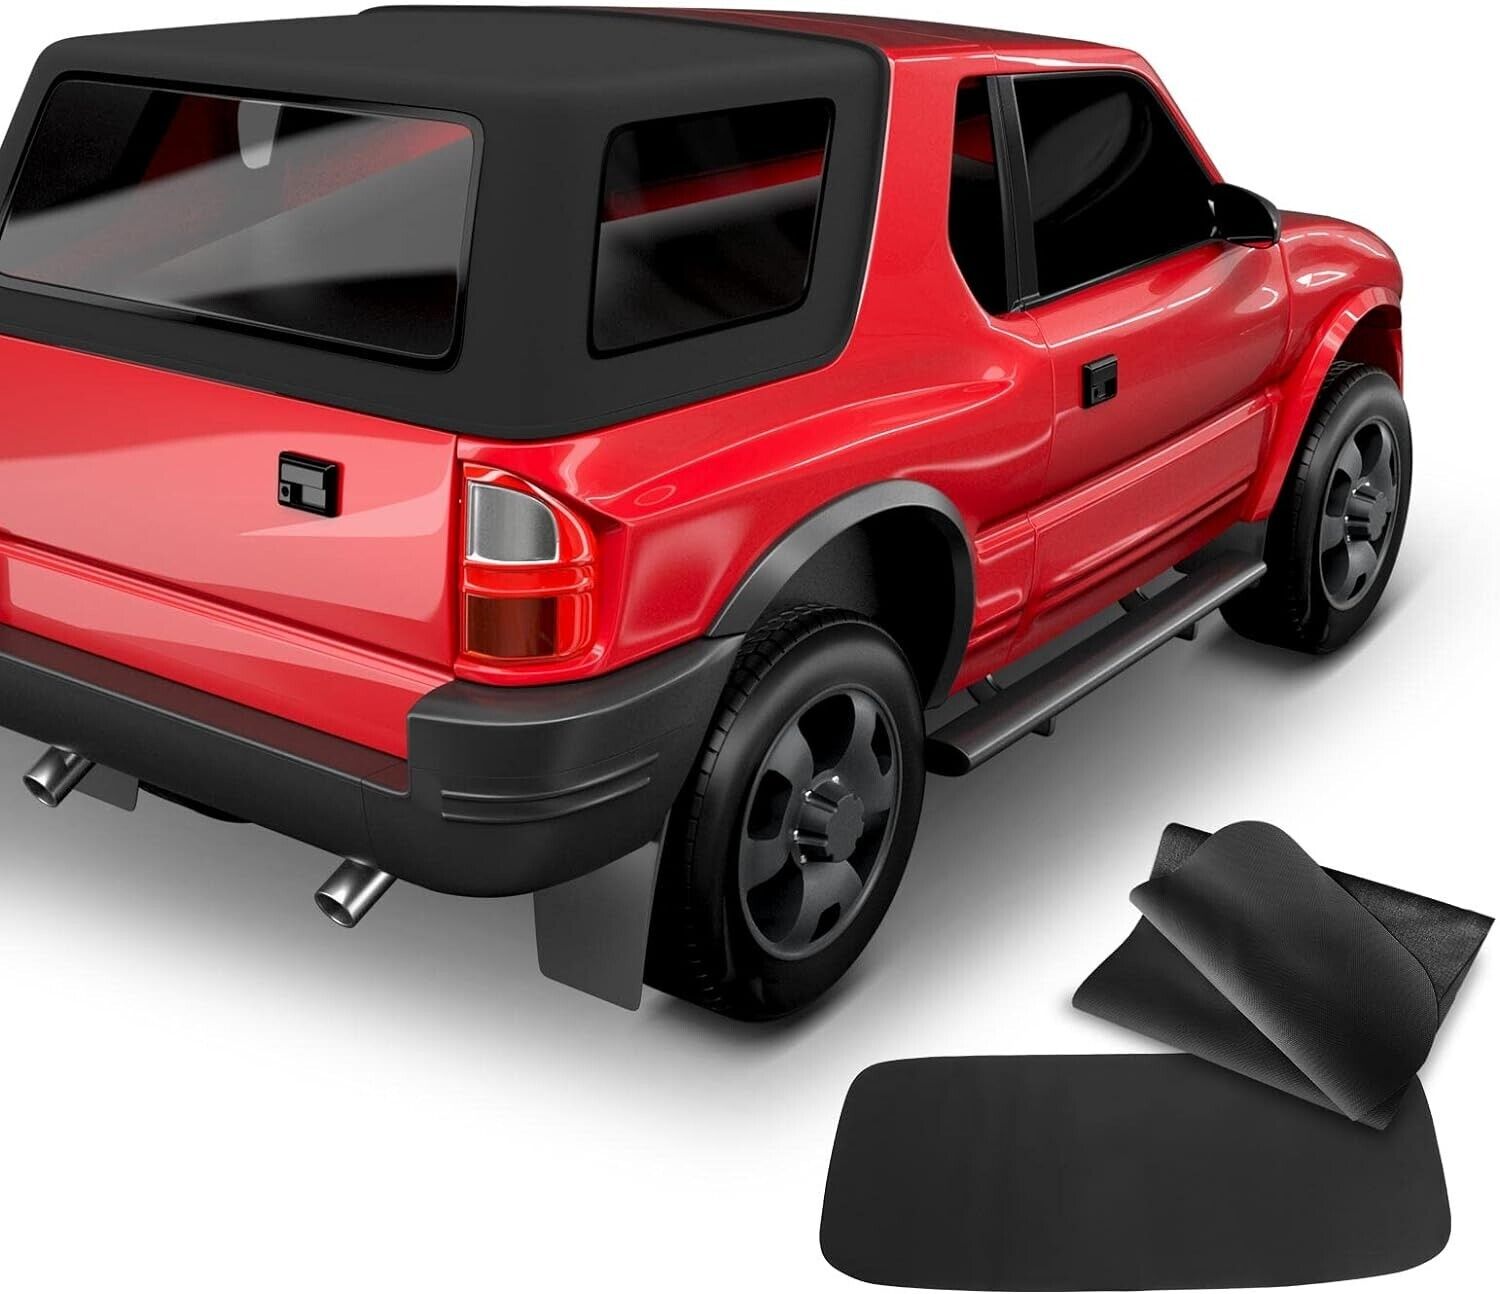 Black Convertible Soft Top Fits Isuzu Amigo 1999-2000 Rodeo 2000 2001 2002 SUV